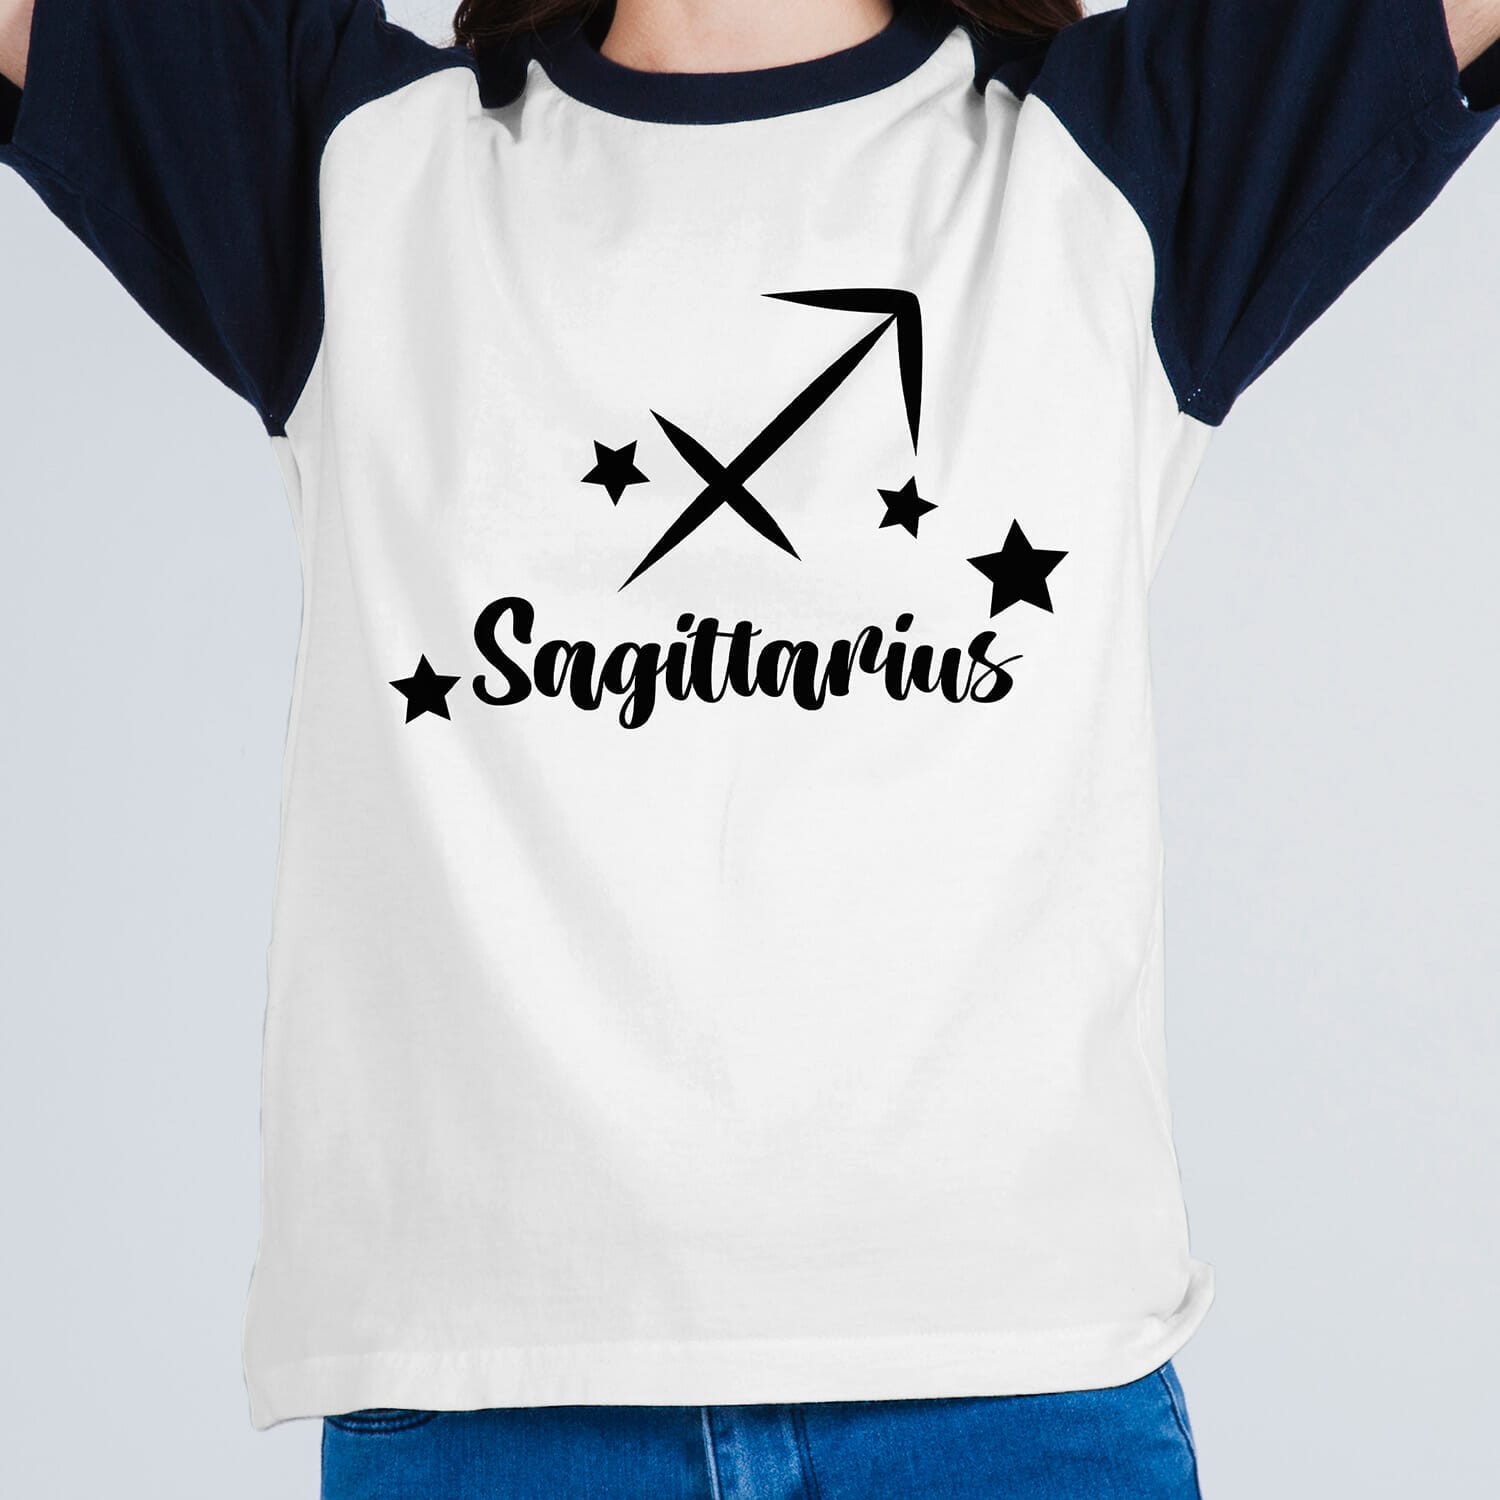 Sagittarius Horoscope Tshirt design